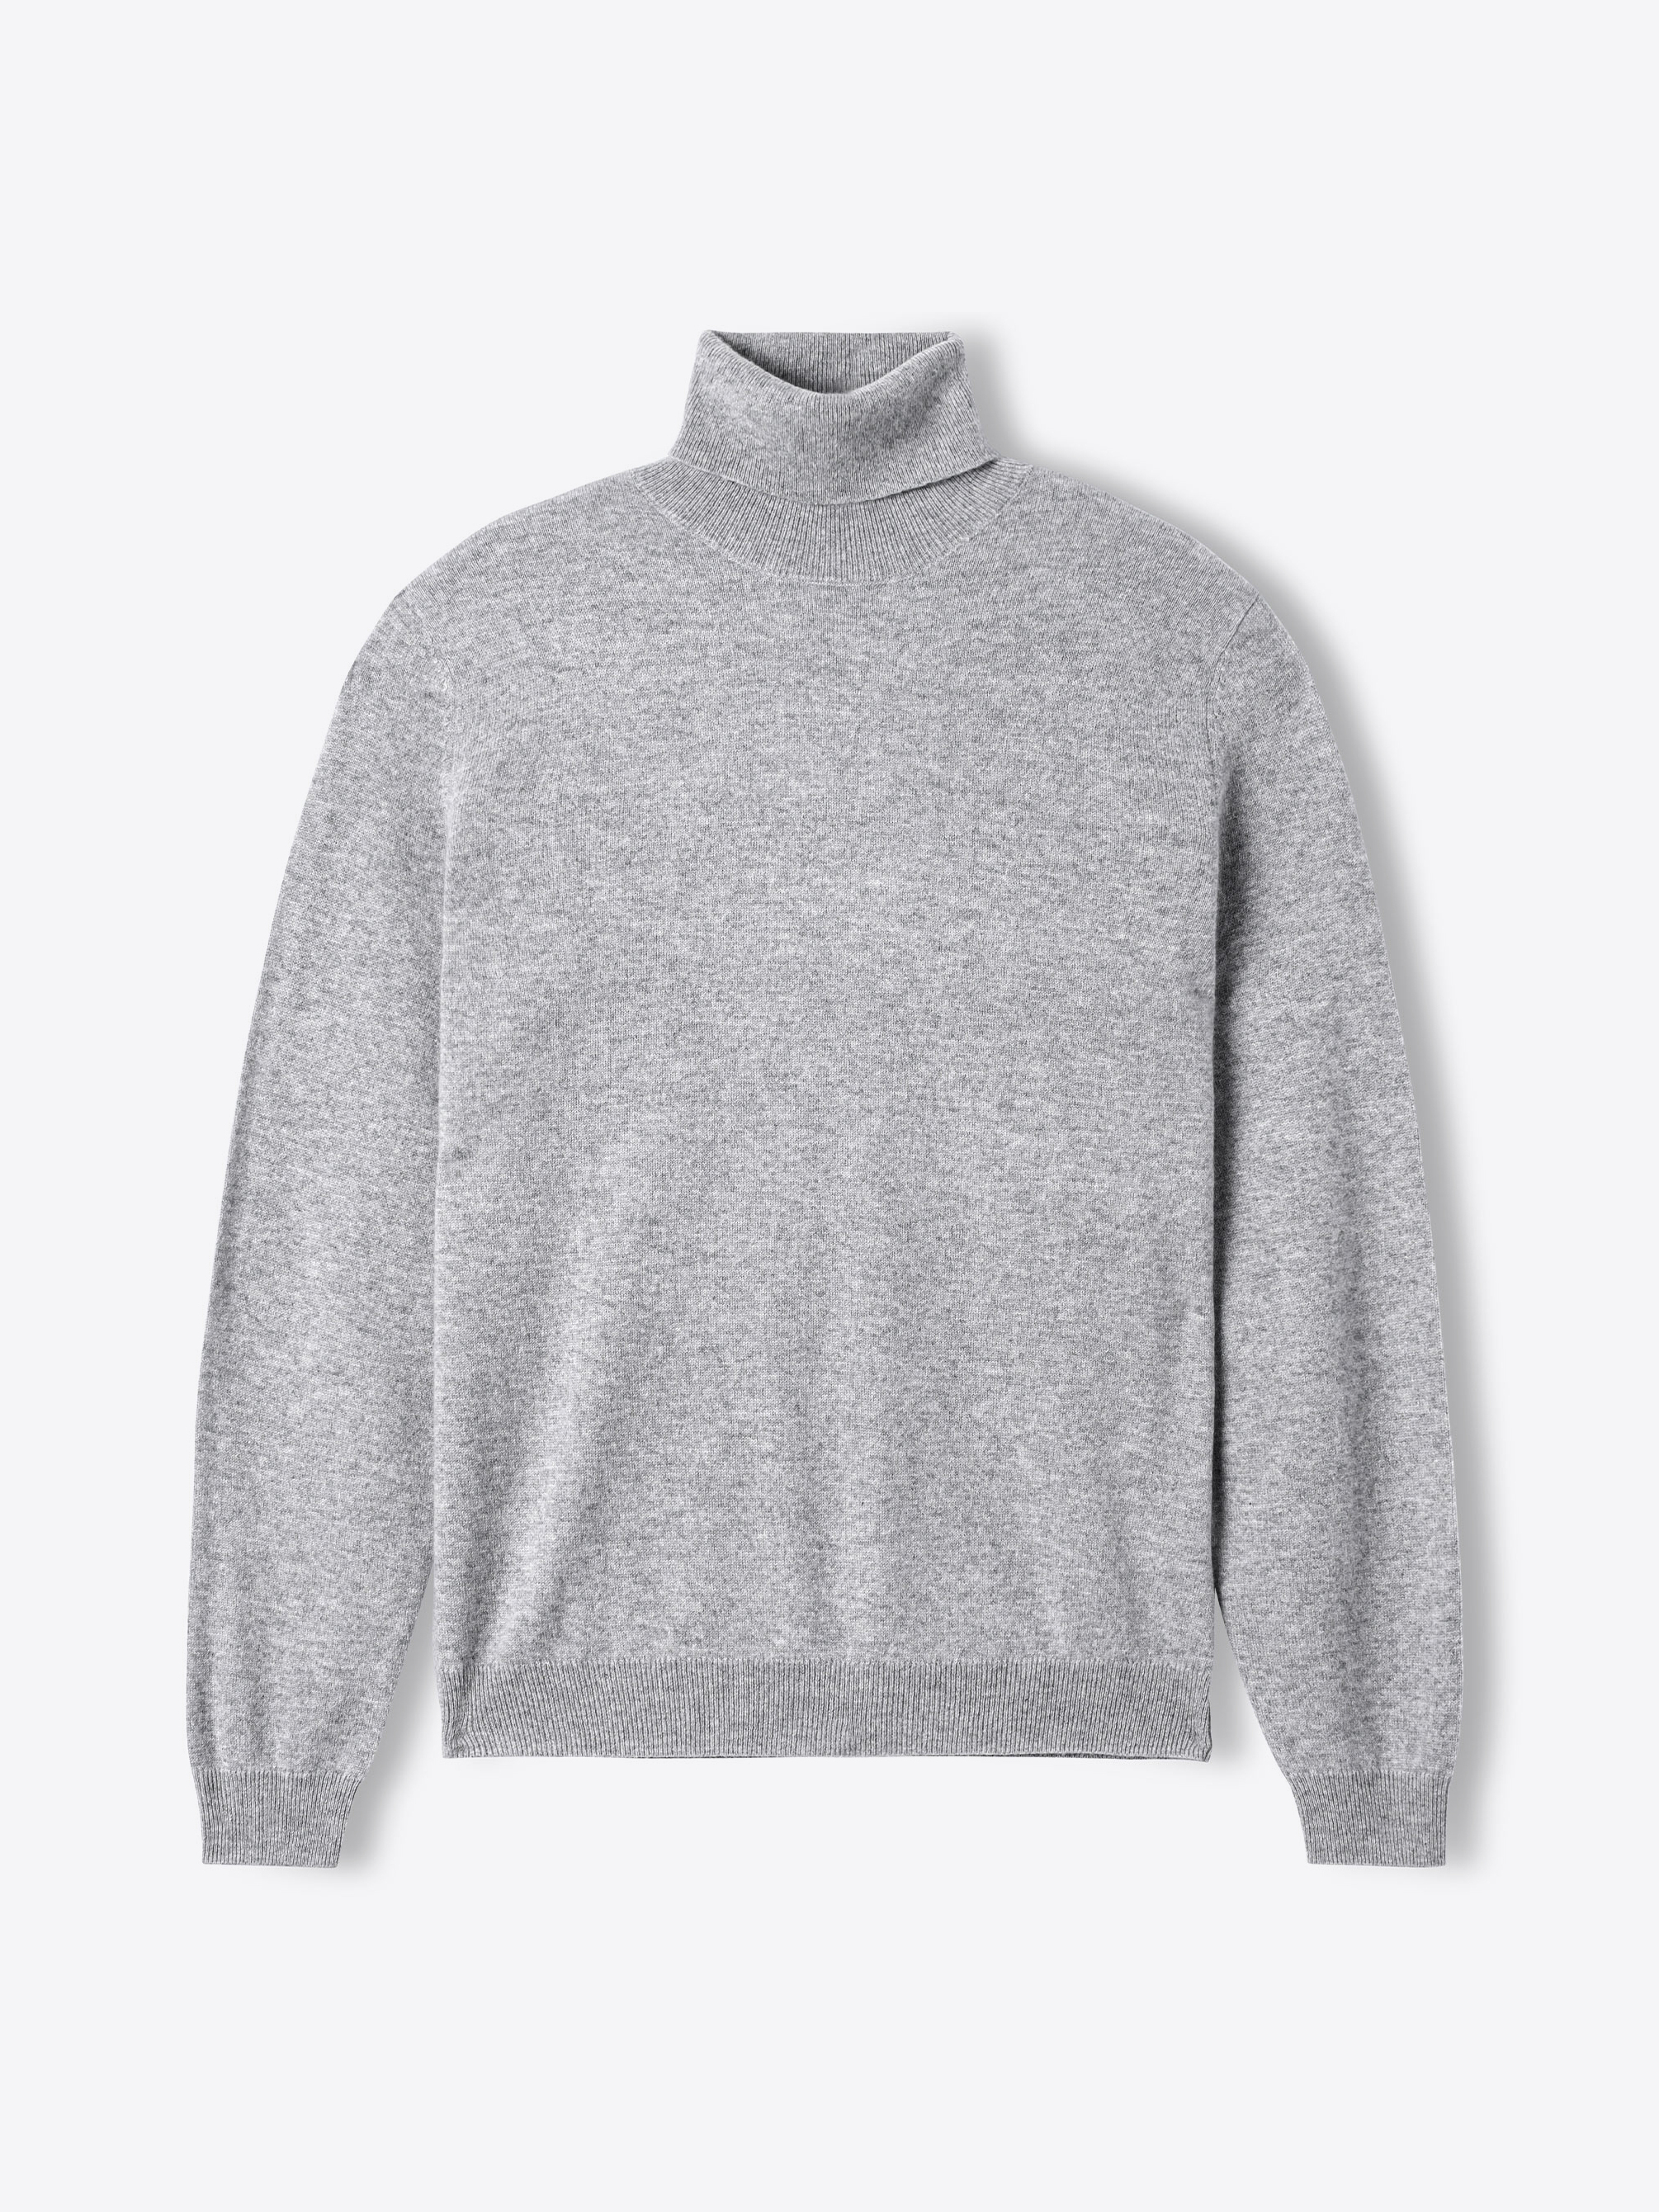 Zoom Image of Light Grey Cashmere Turtleneck Sweater